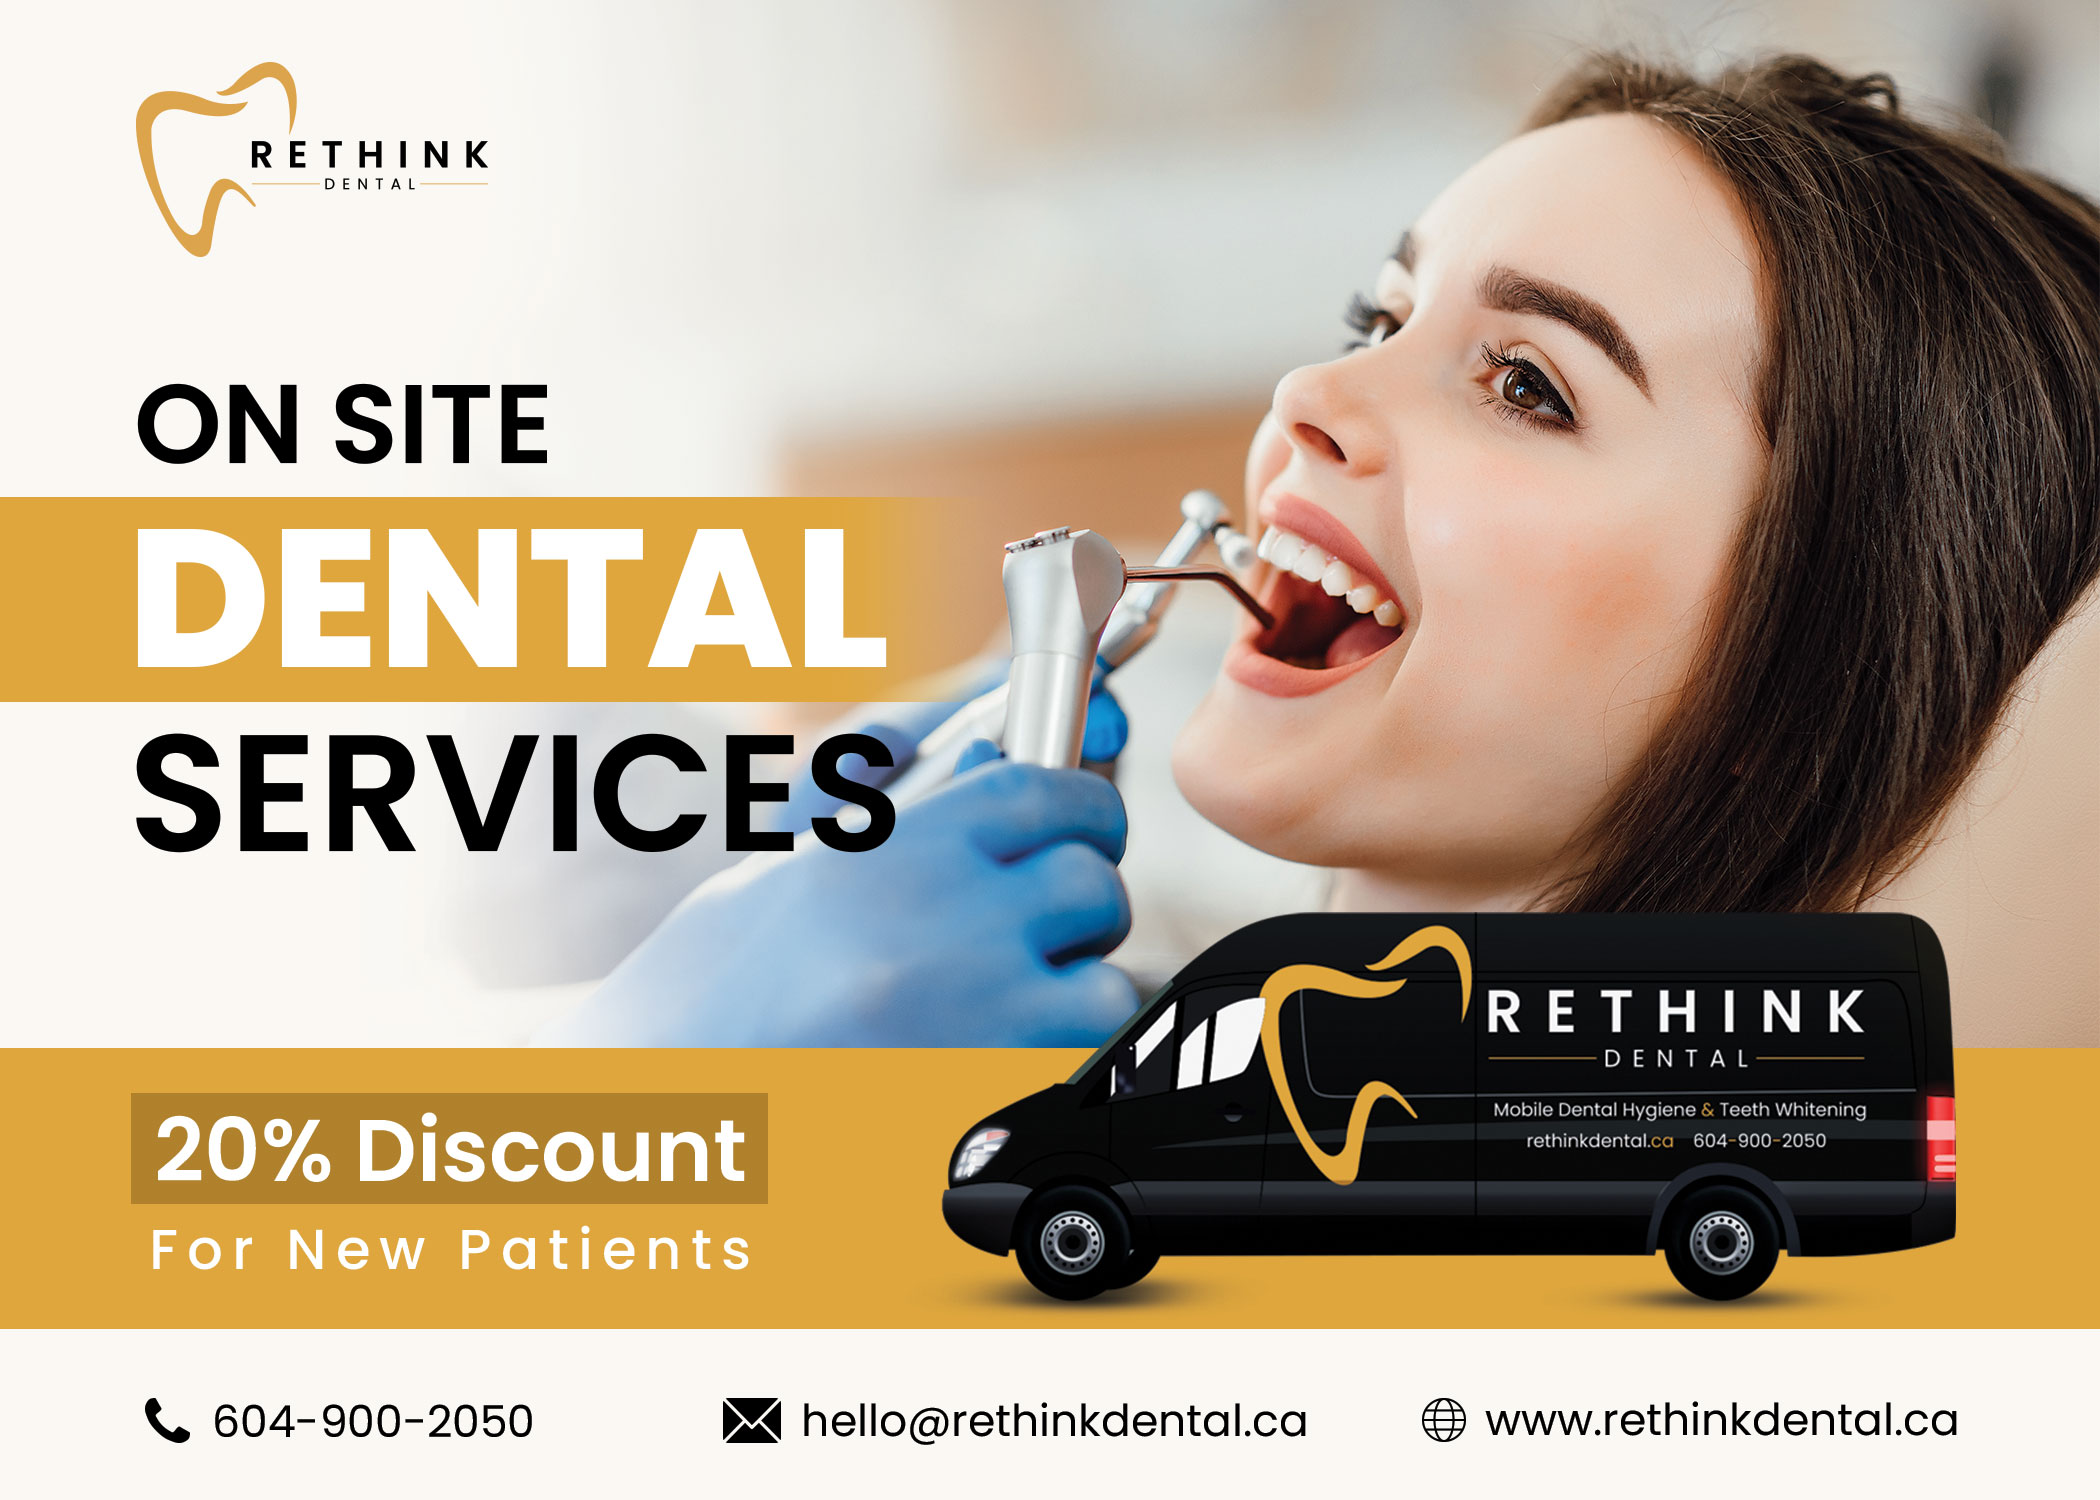 Rethink Dental offers